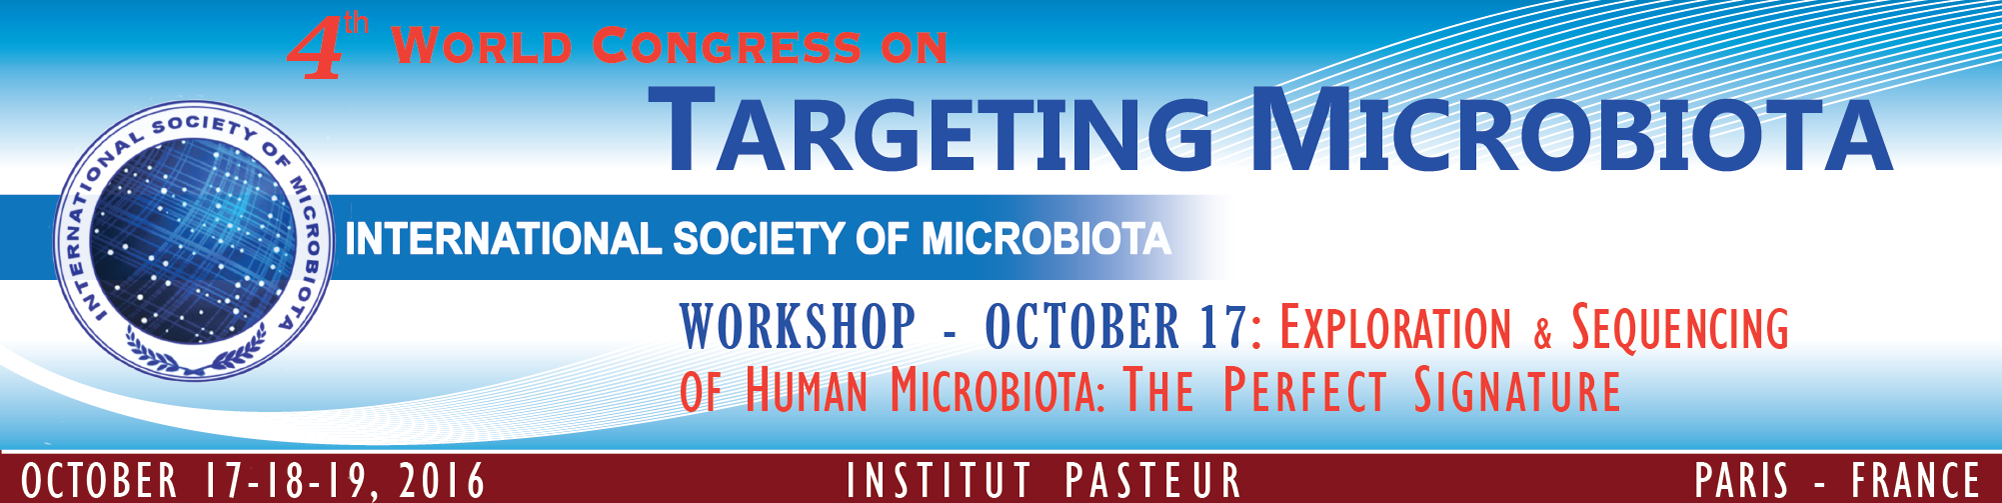 microbiota banner workshop 2016